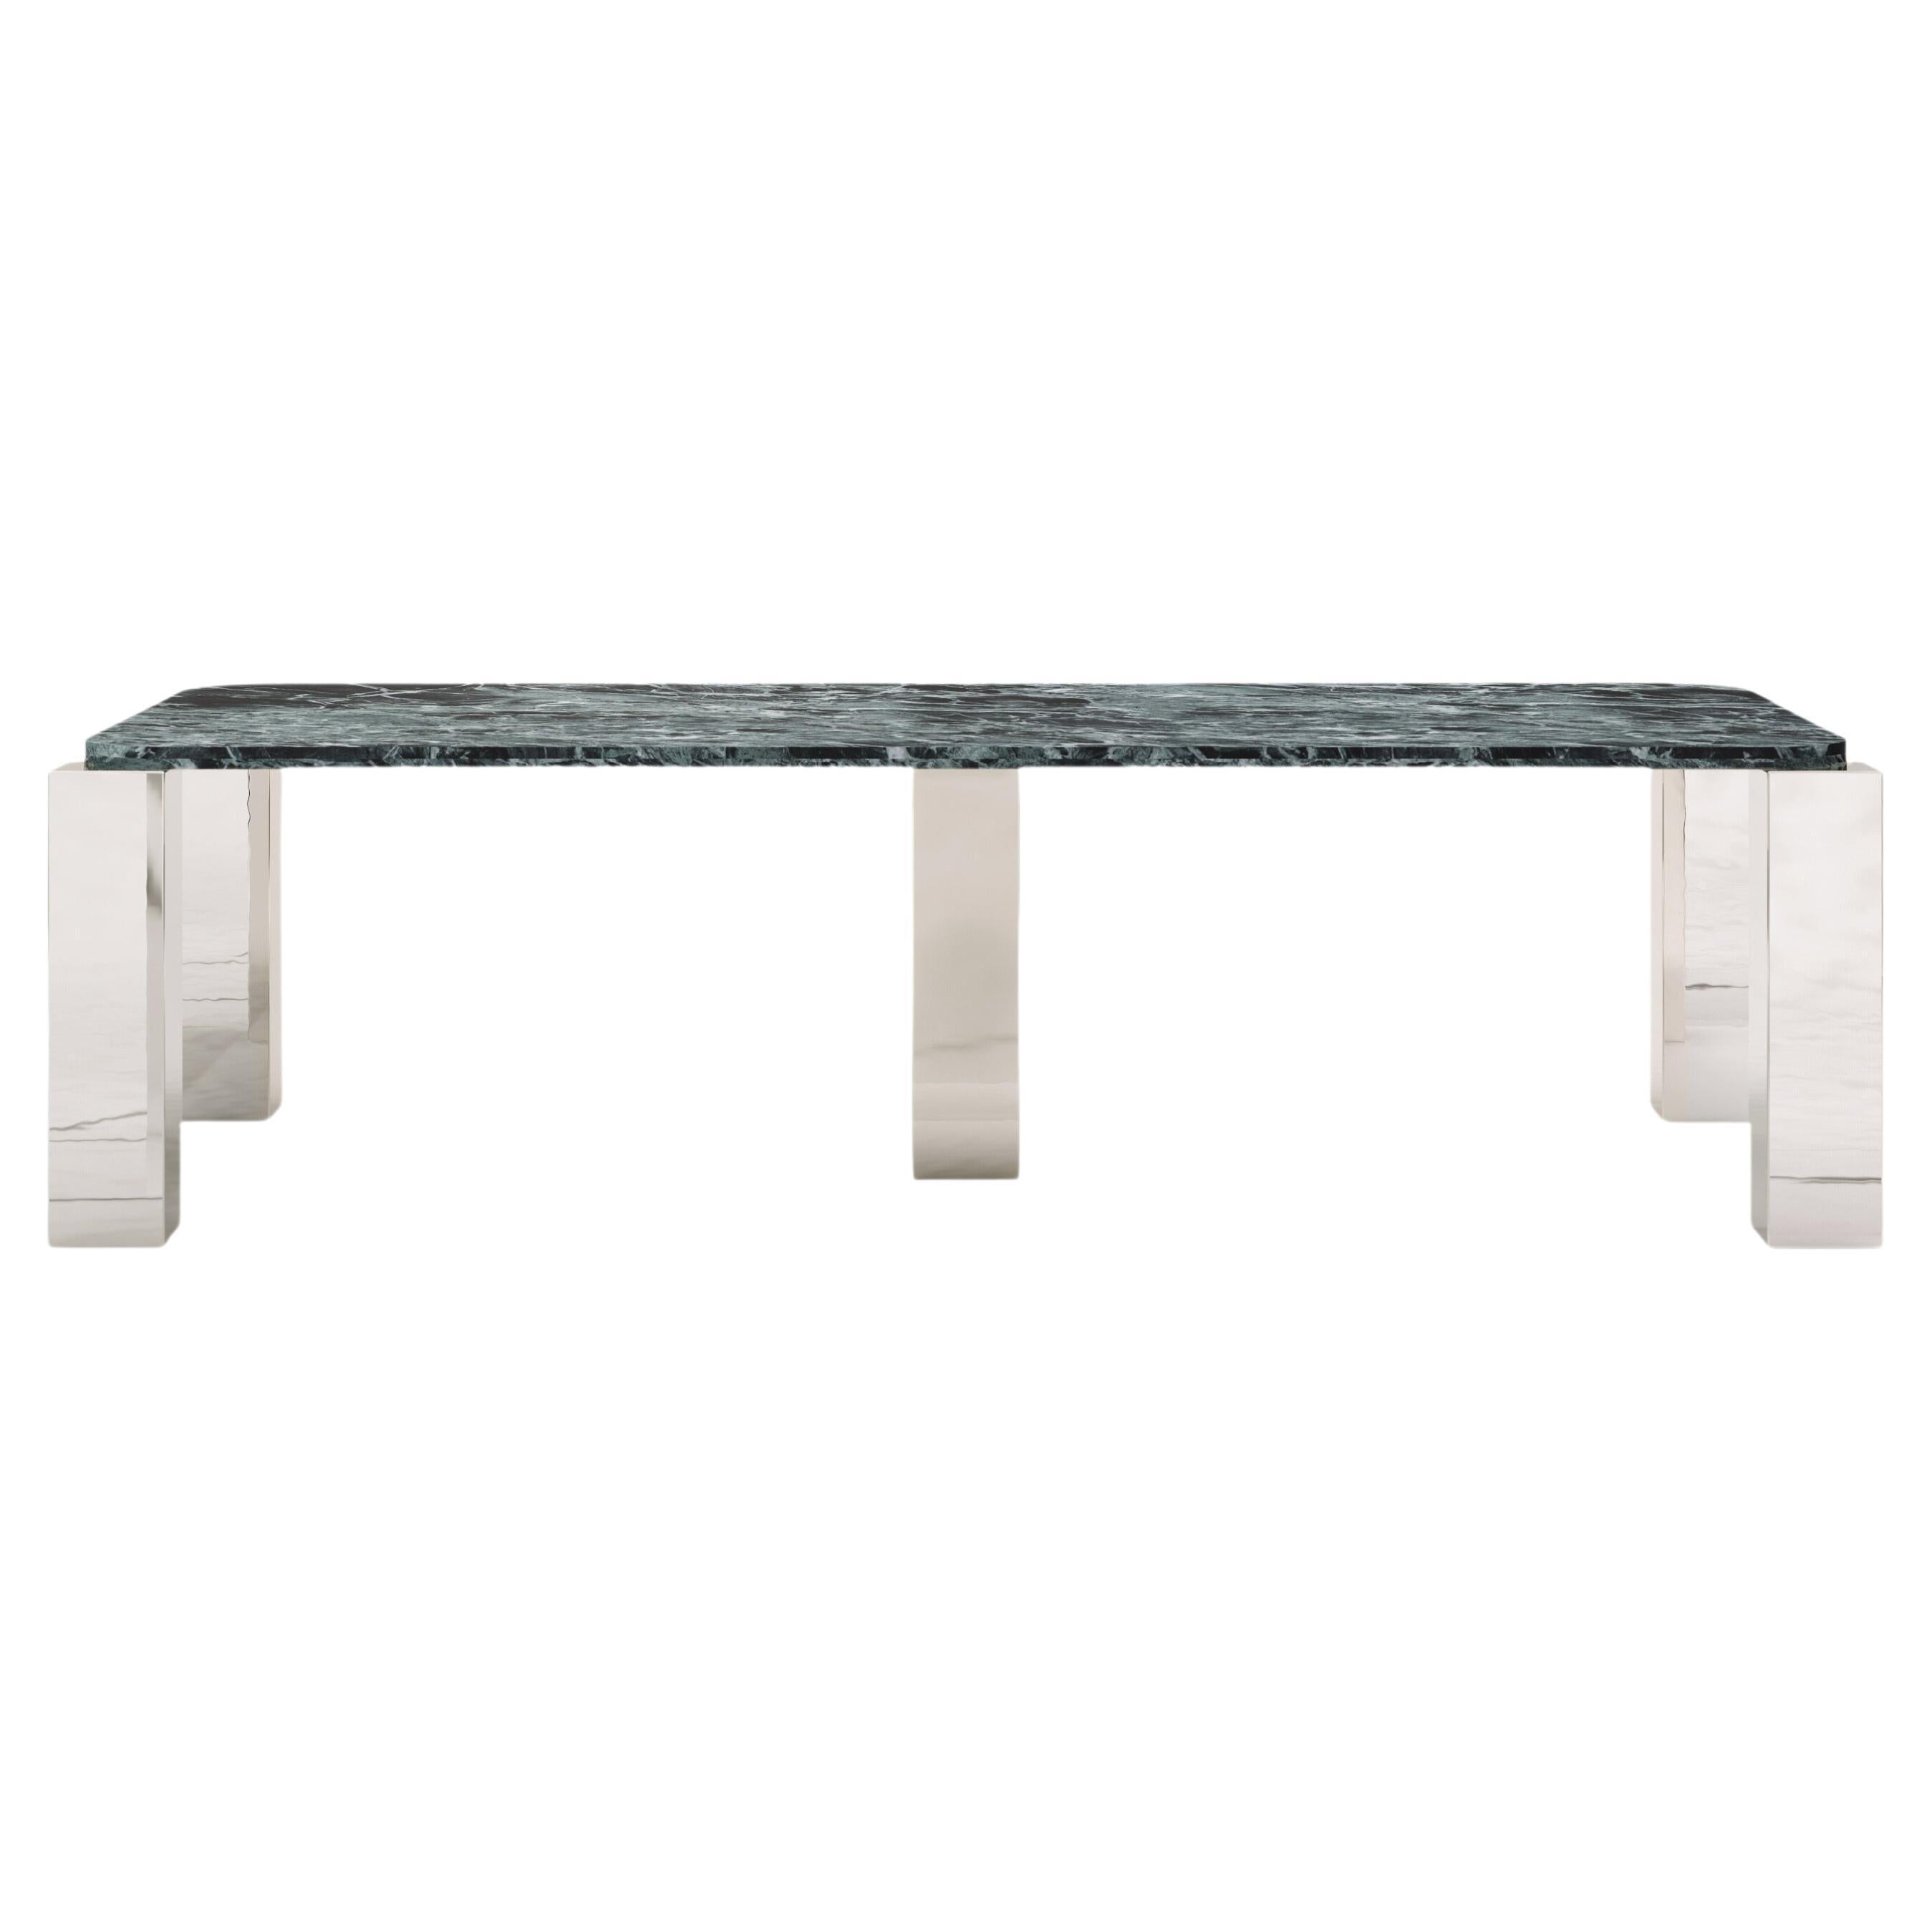 FORM(LA) Cubo Rectangle Dining Table 120”L x 50”W x 30”H Verde Marble & Chrome